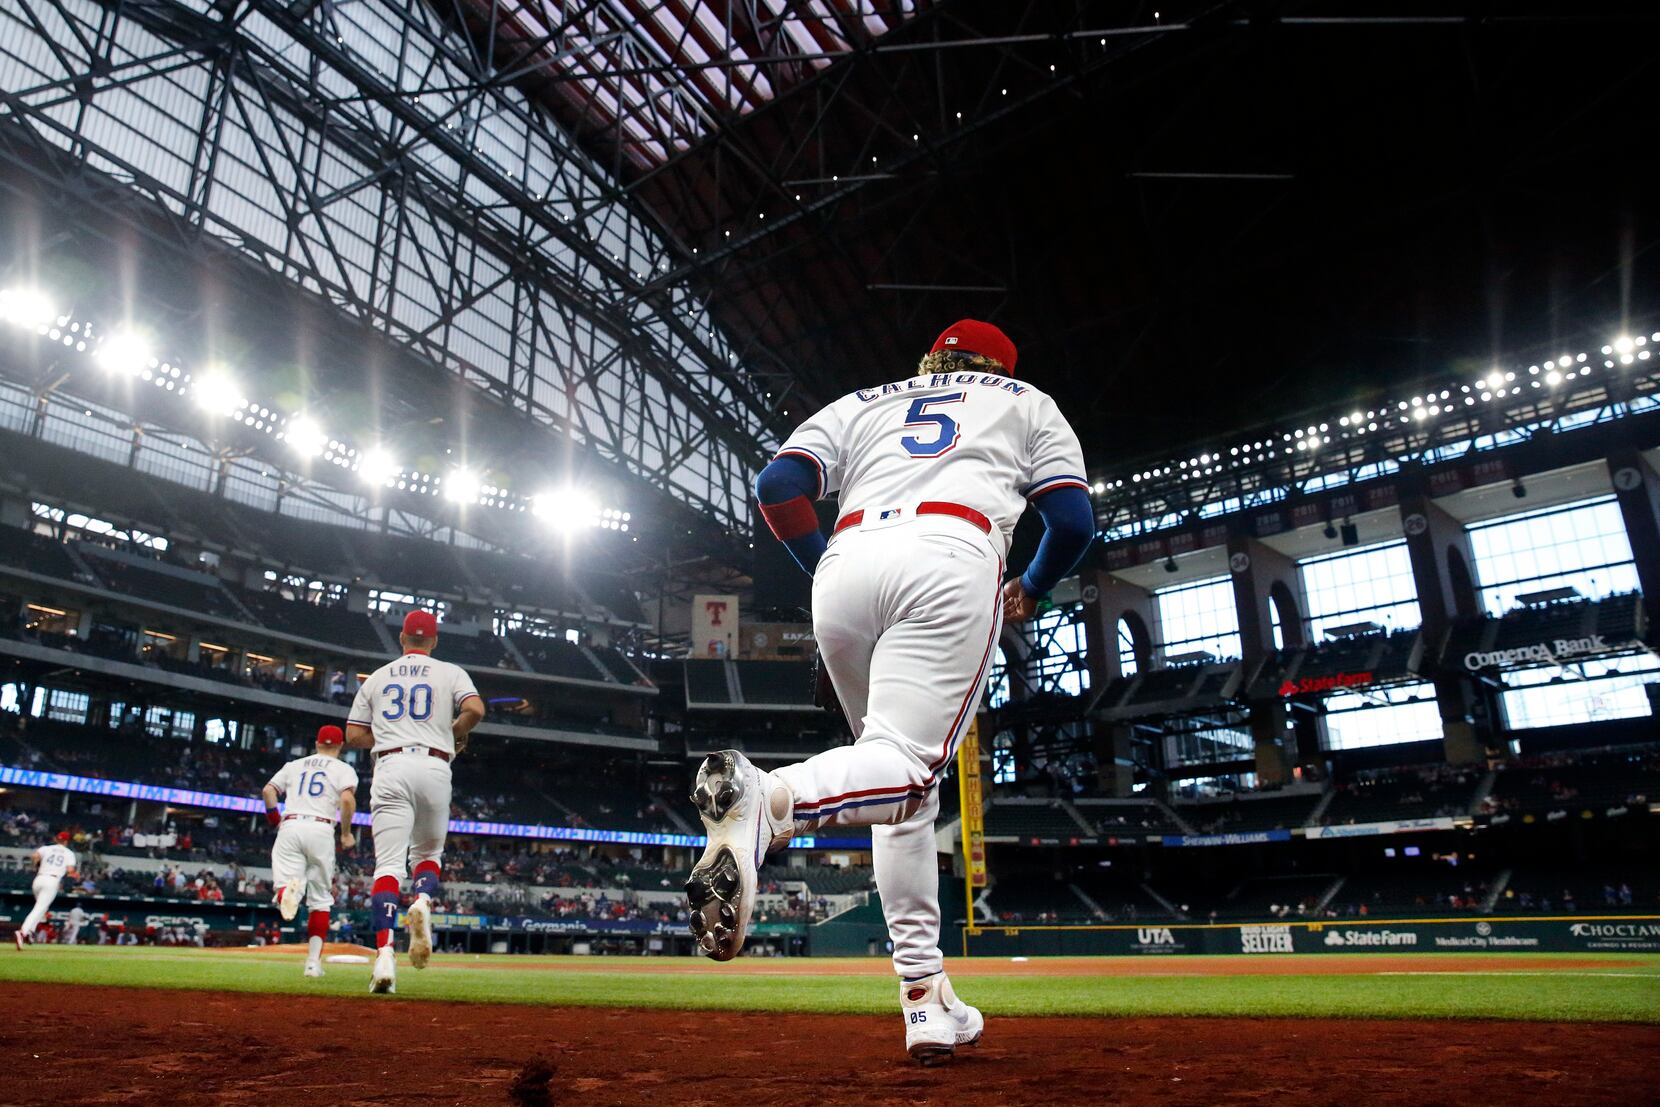 Texas Rangers to start $10 ticket sale on Black Friday